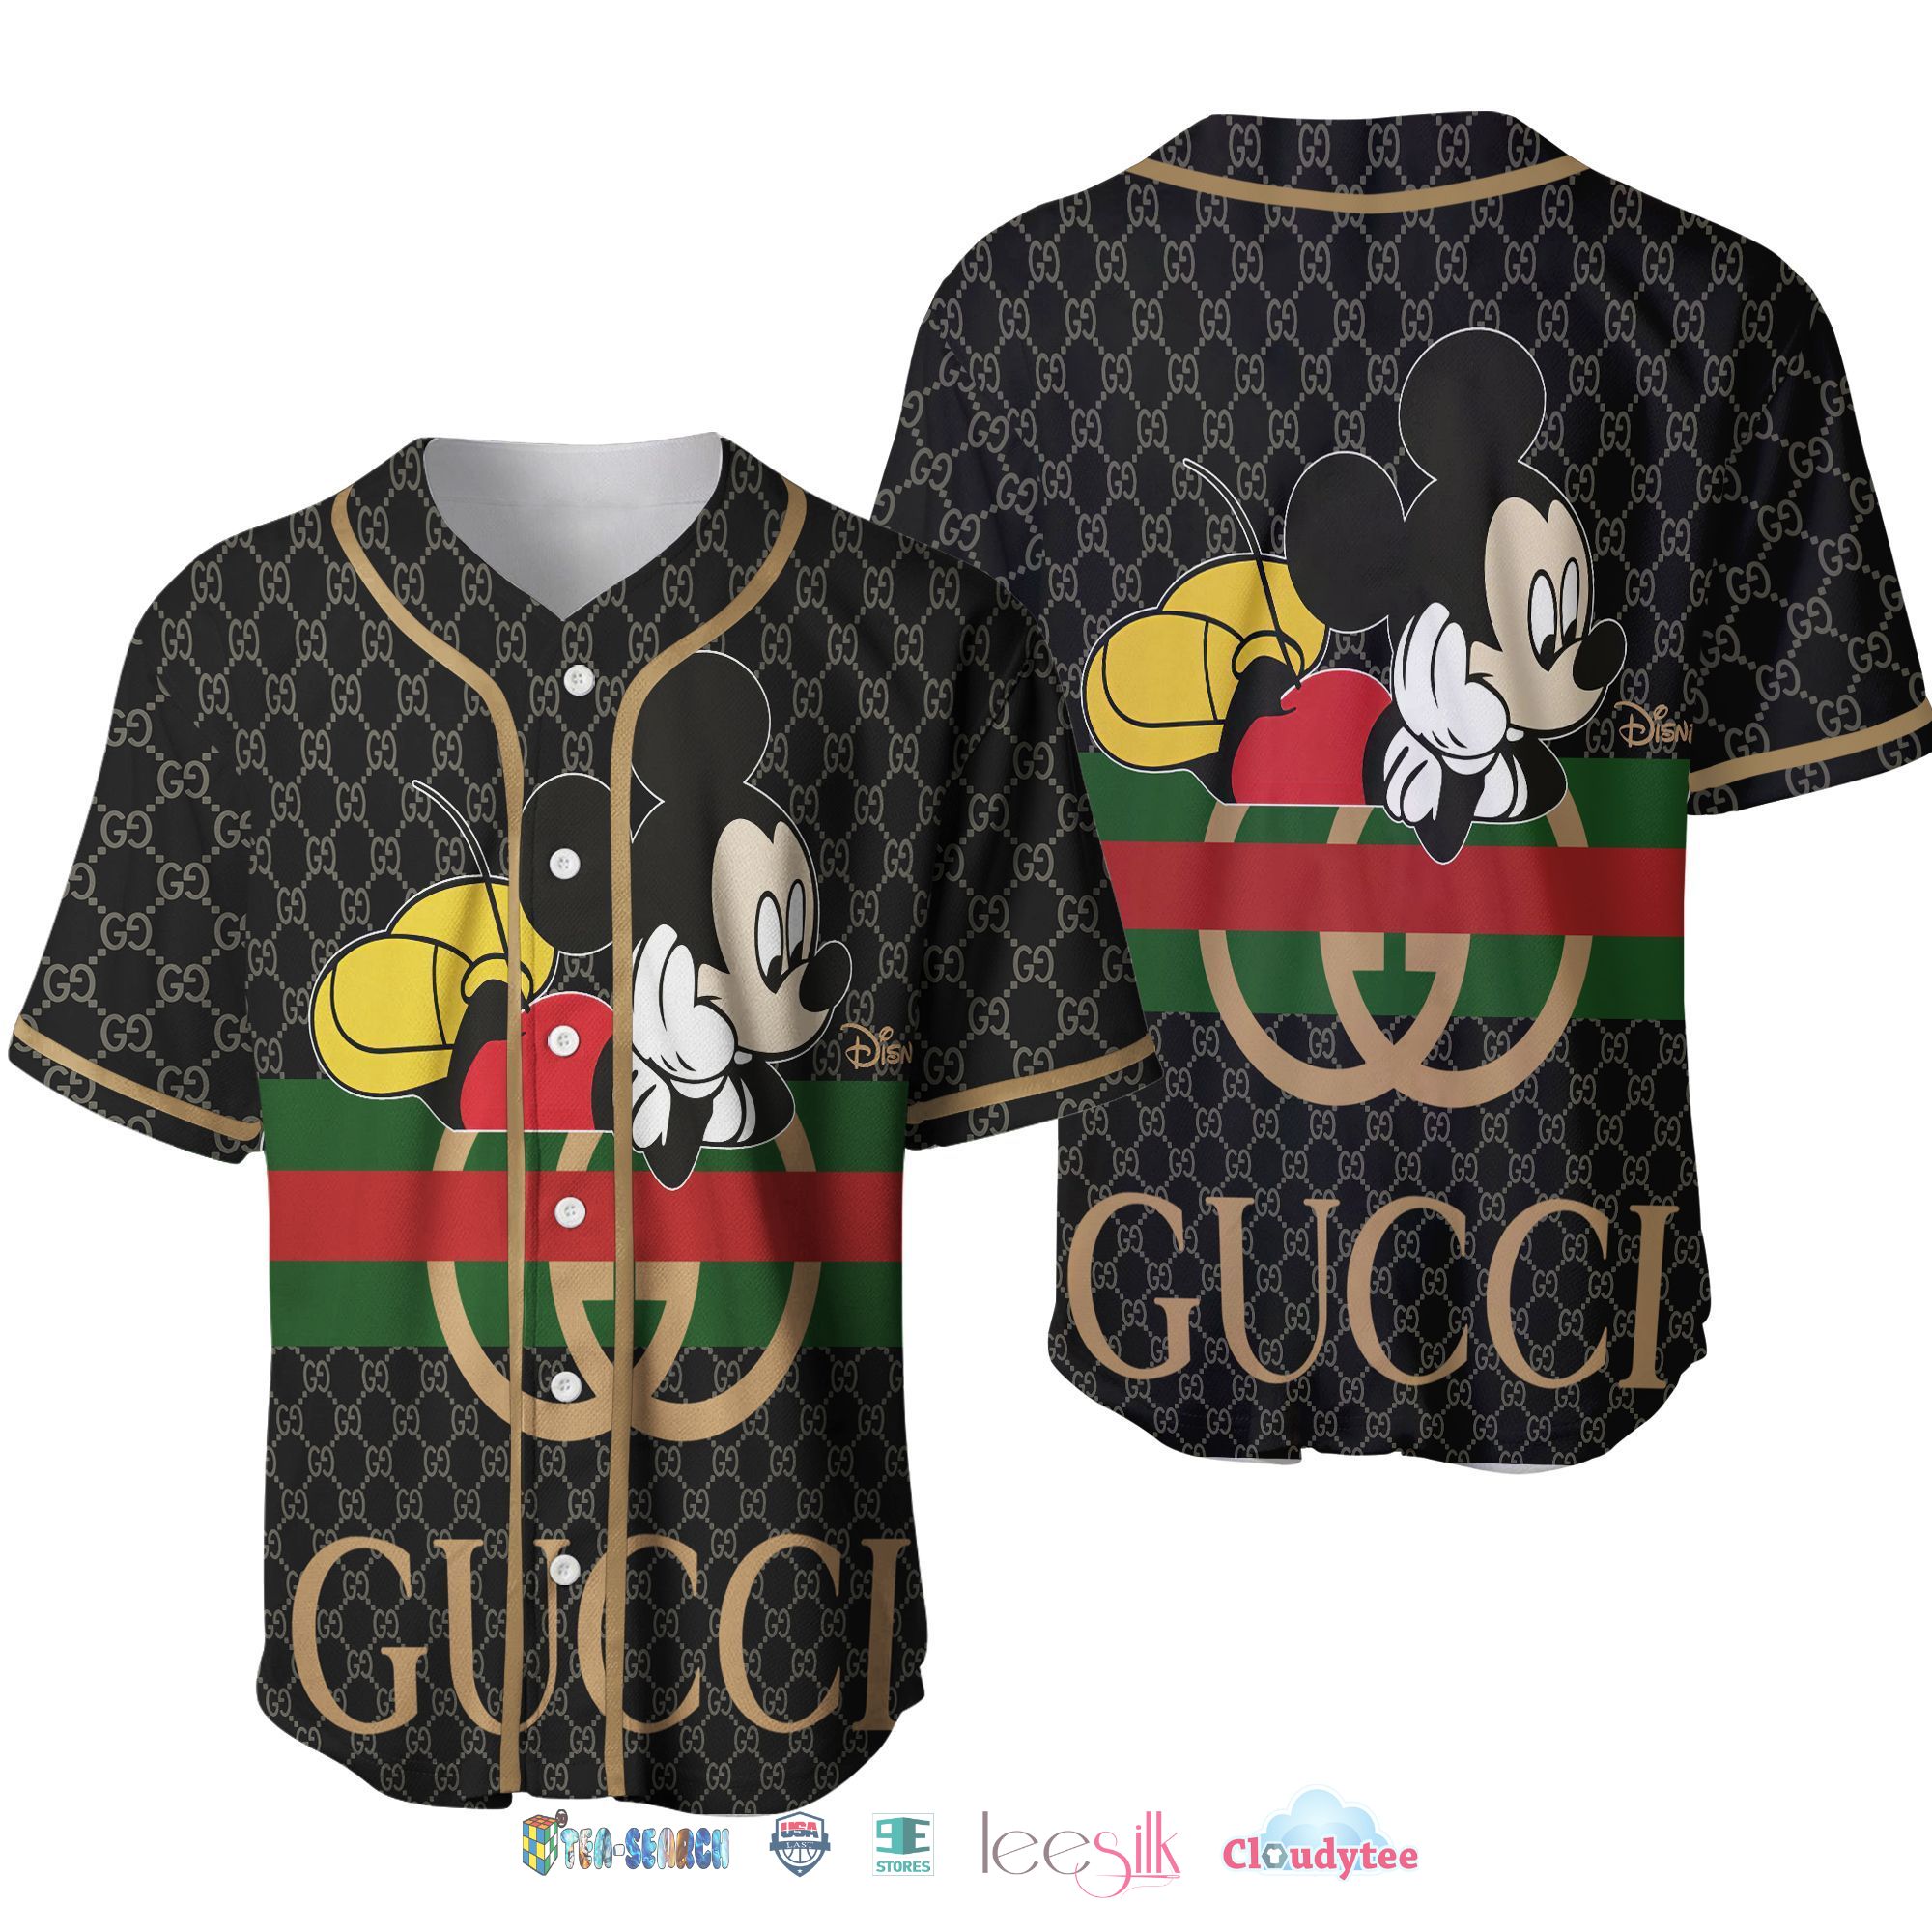 Gucci Mickey Mouse Baseball Jersey Shirt HFV256 - HomeFavo